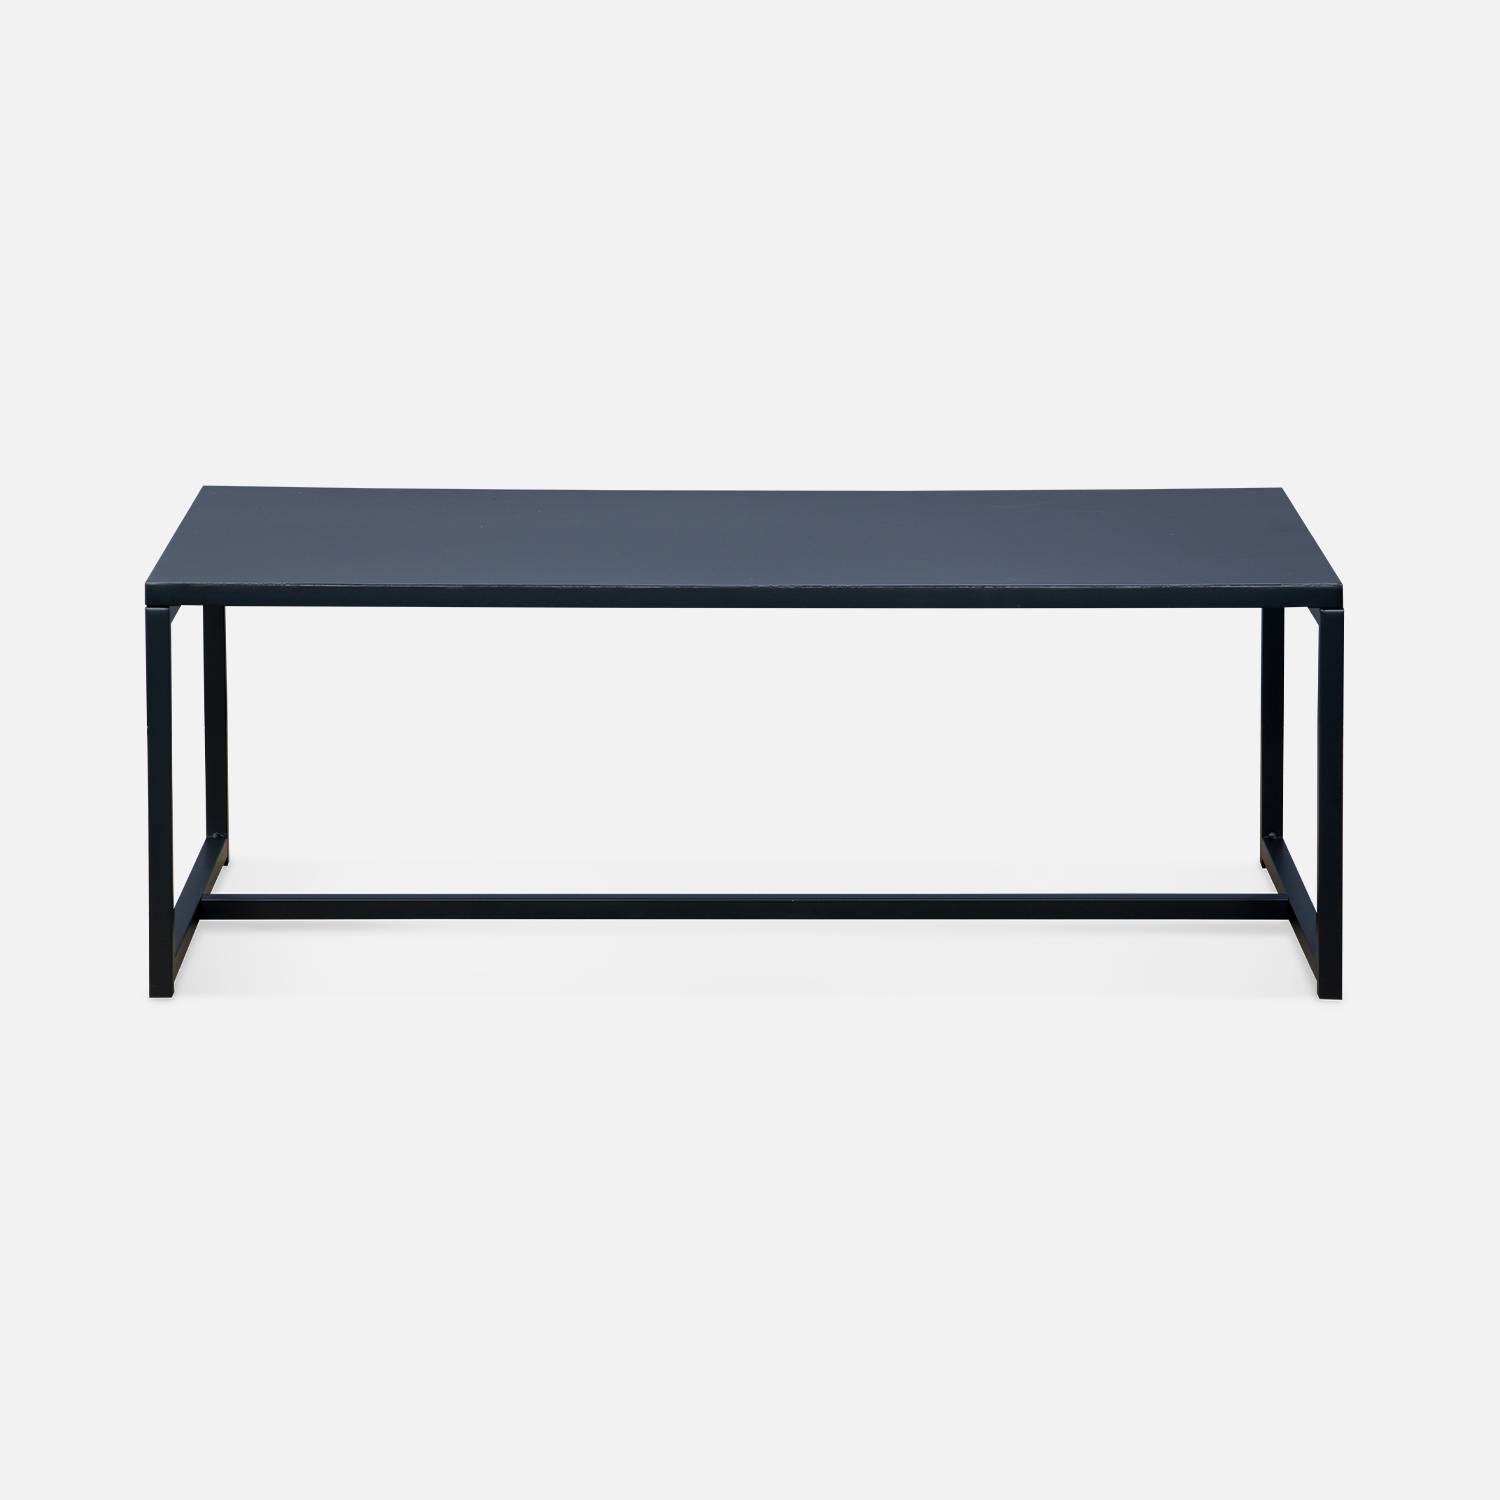 Black metal coffee table 100x50x36cm - Industrial - metal legs, design Photo4